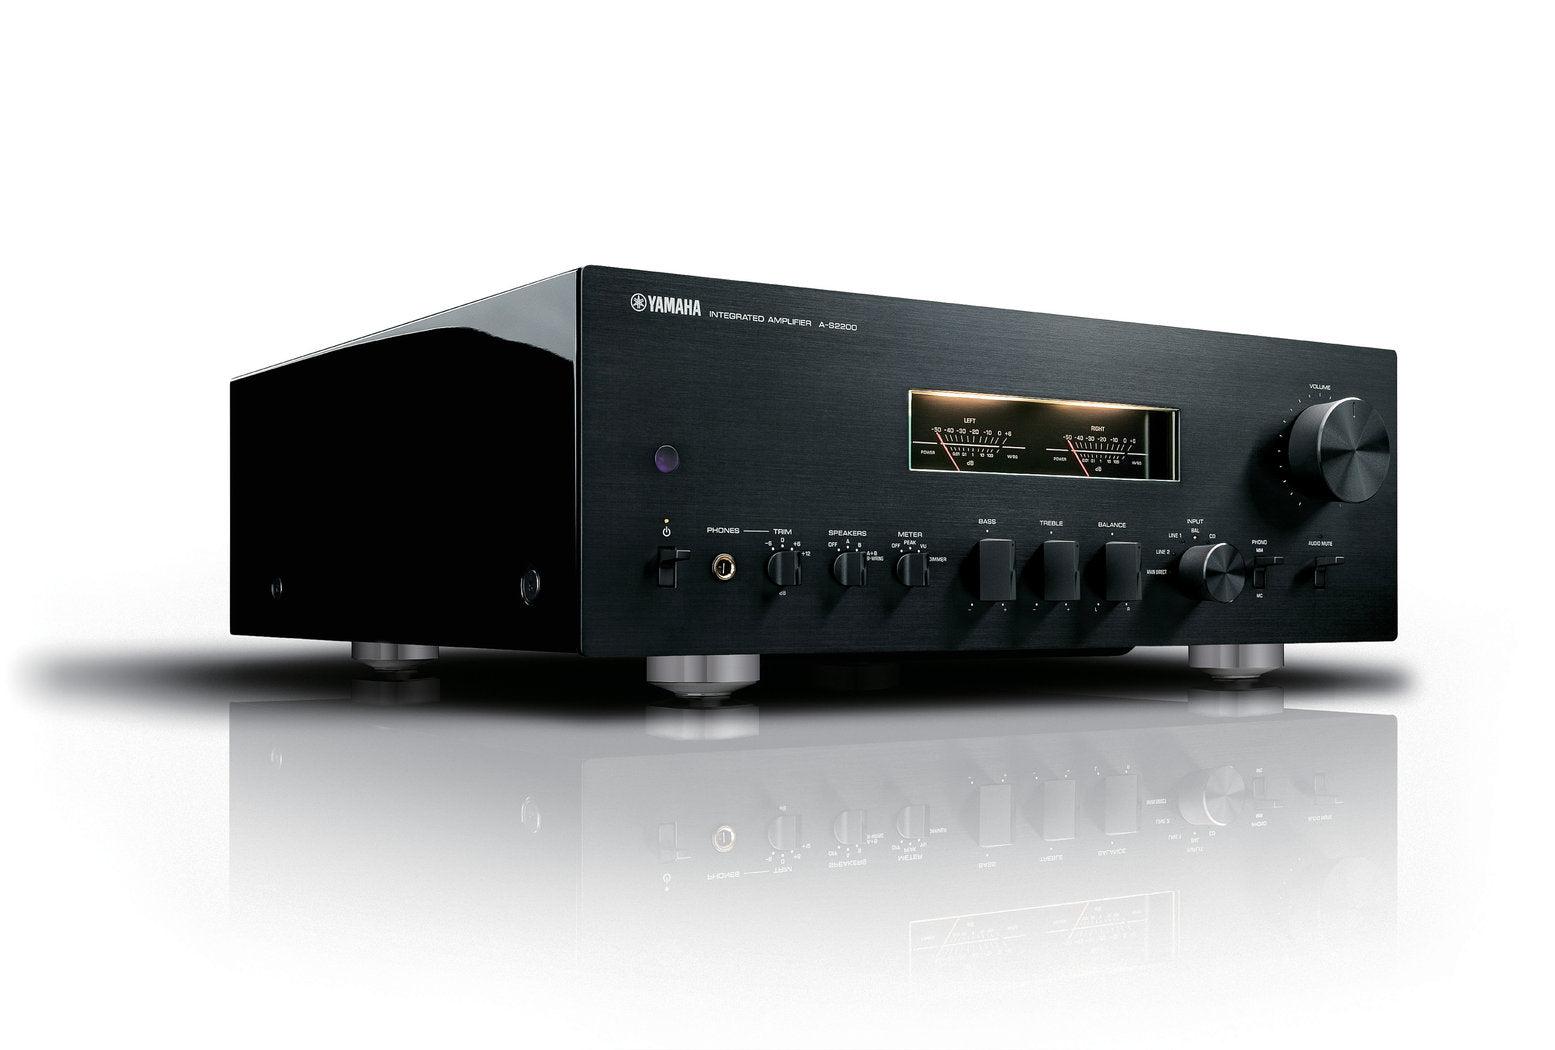 Yamaha A-S2200 stereo amplifier